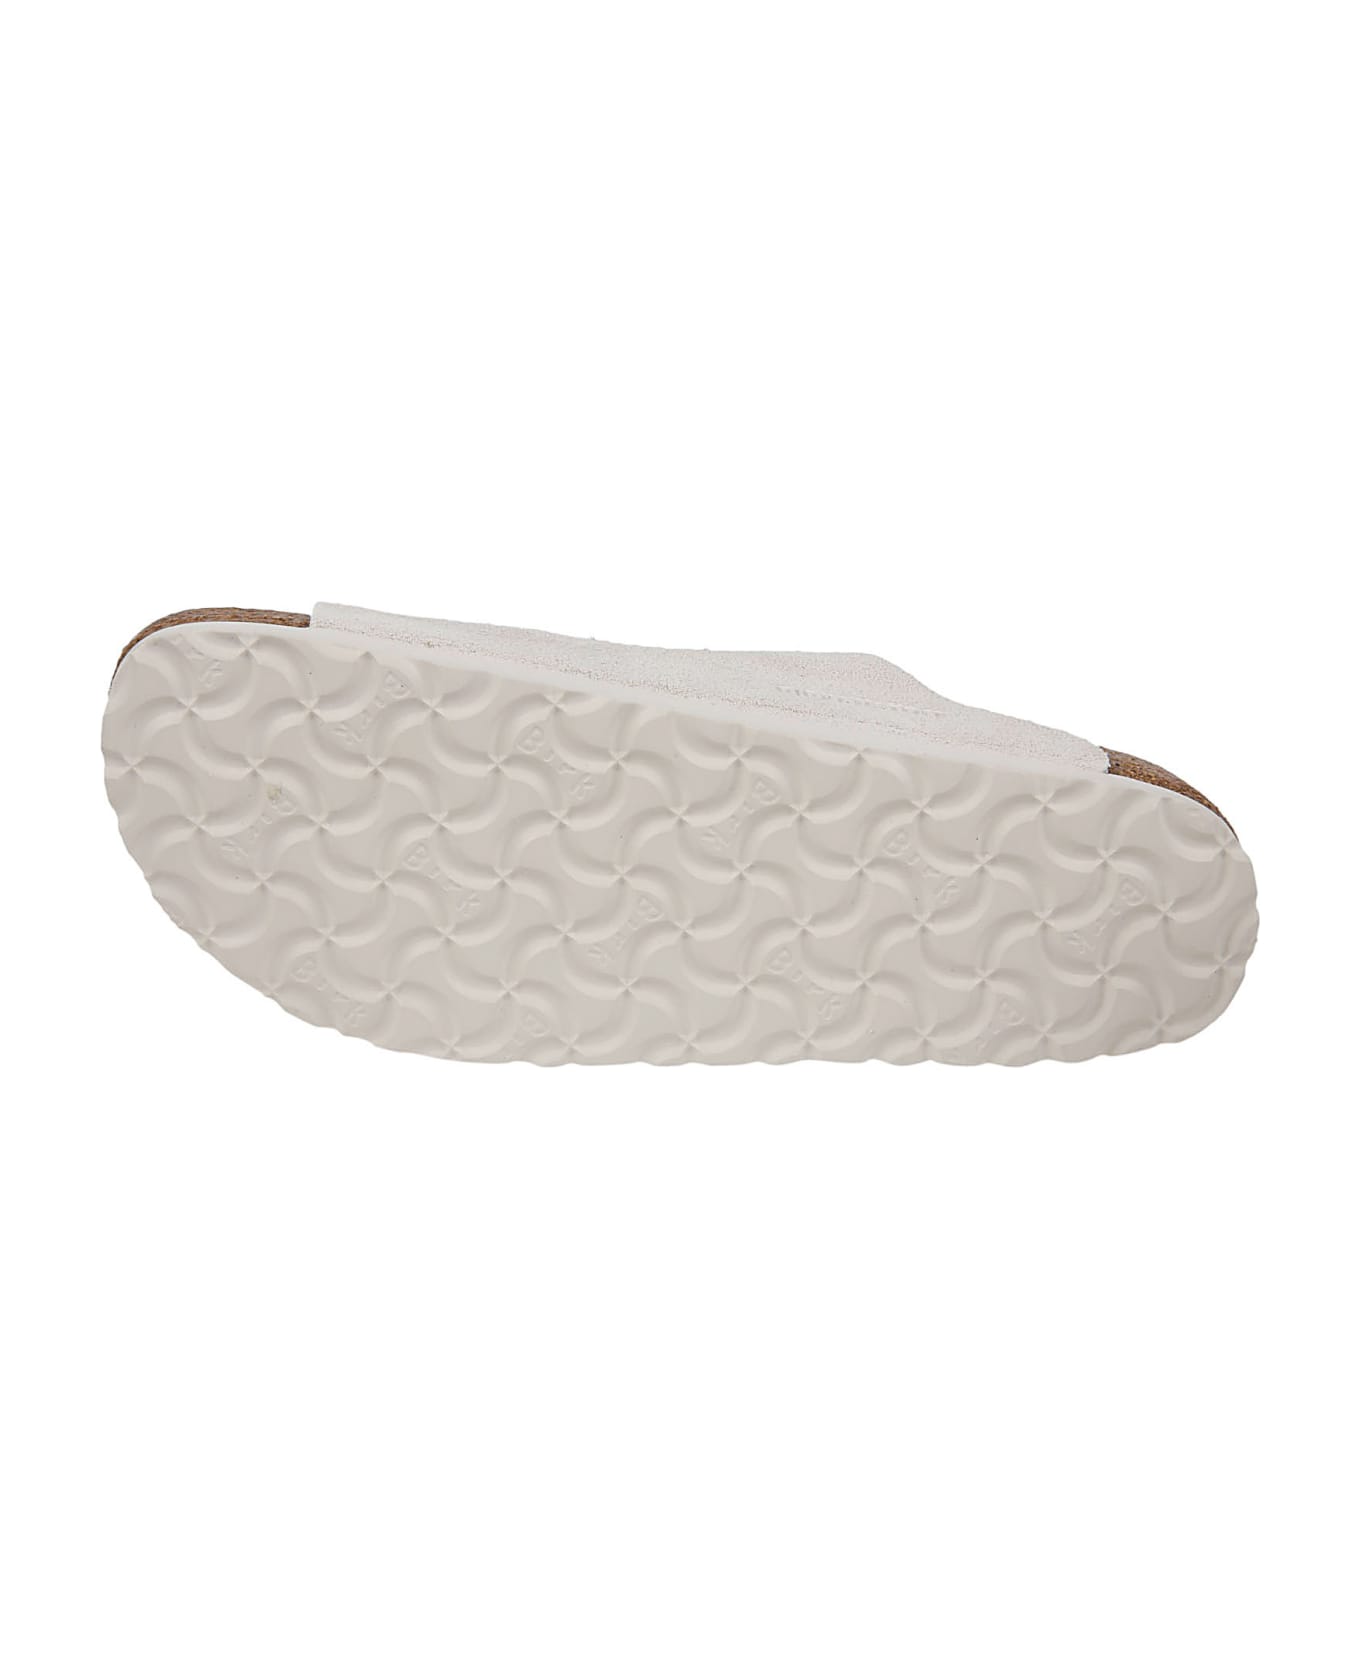 Birkenstock Arizona Sandals - Antique White